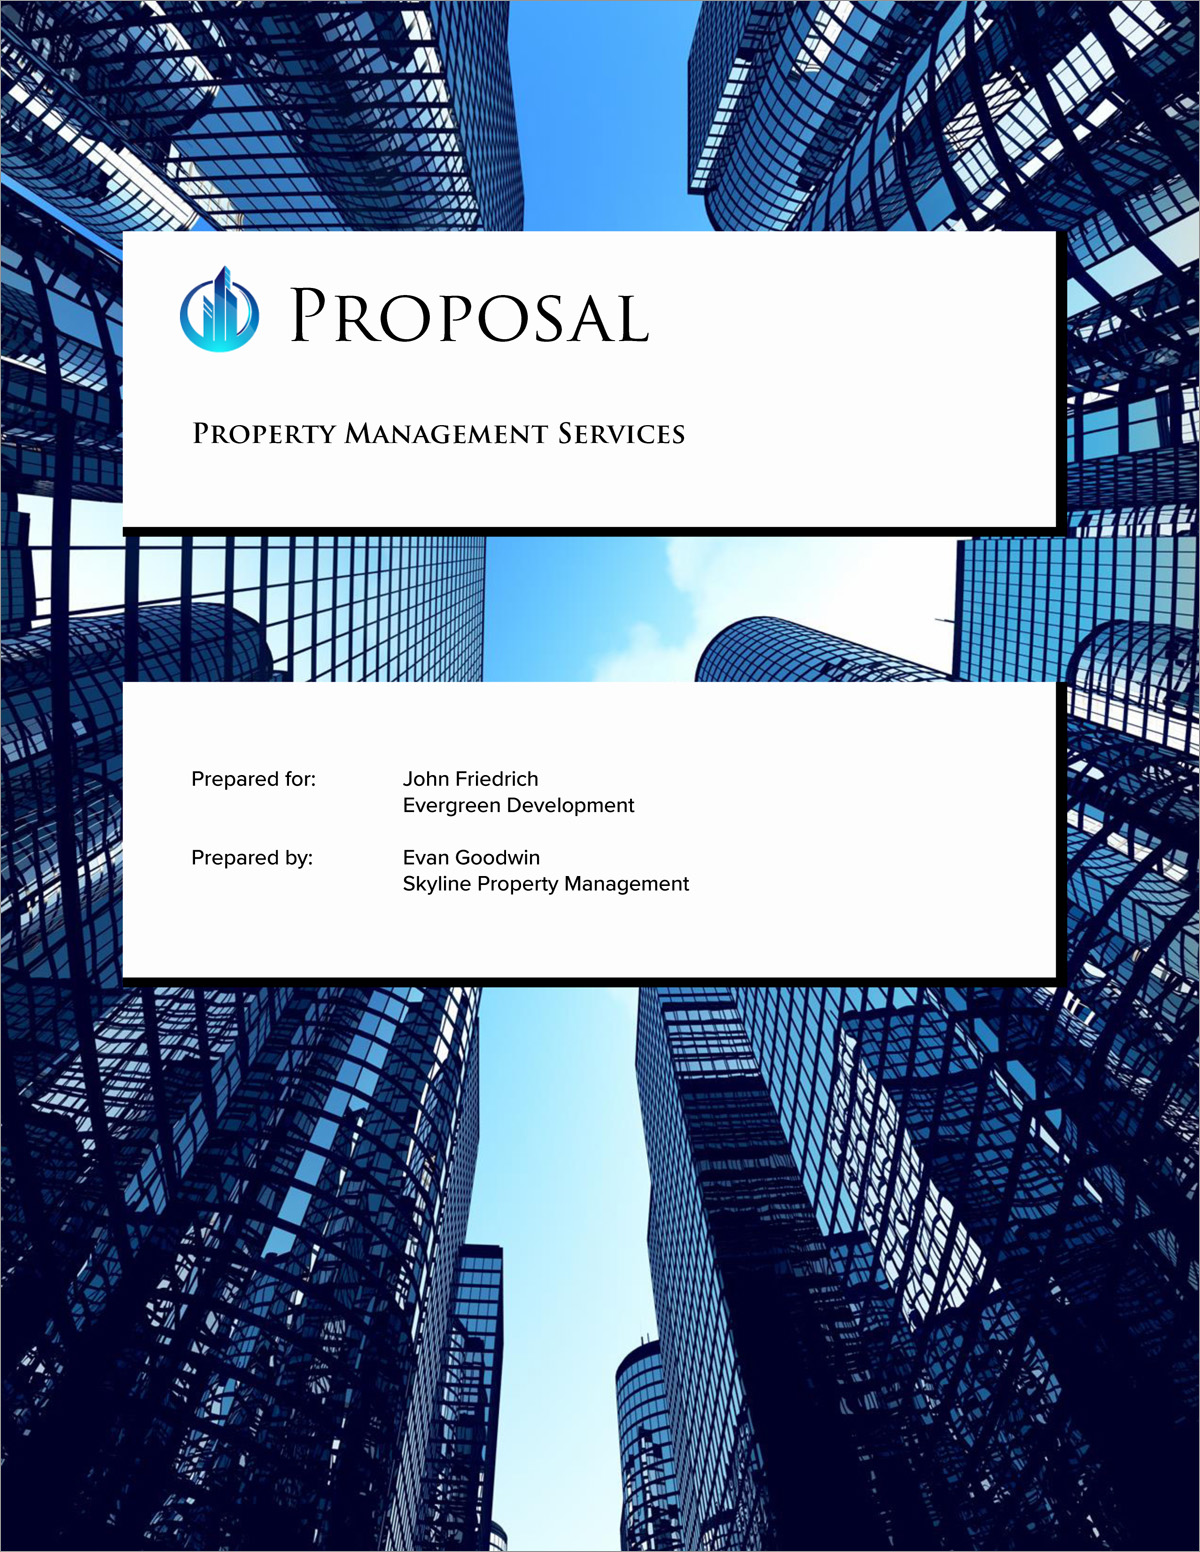 property-management-services-proposal-5-steps